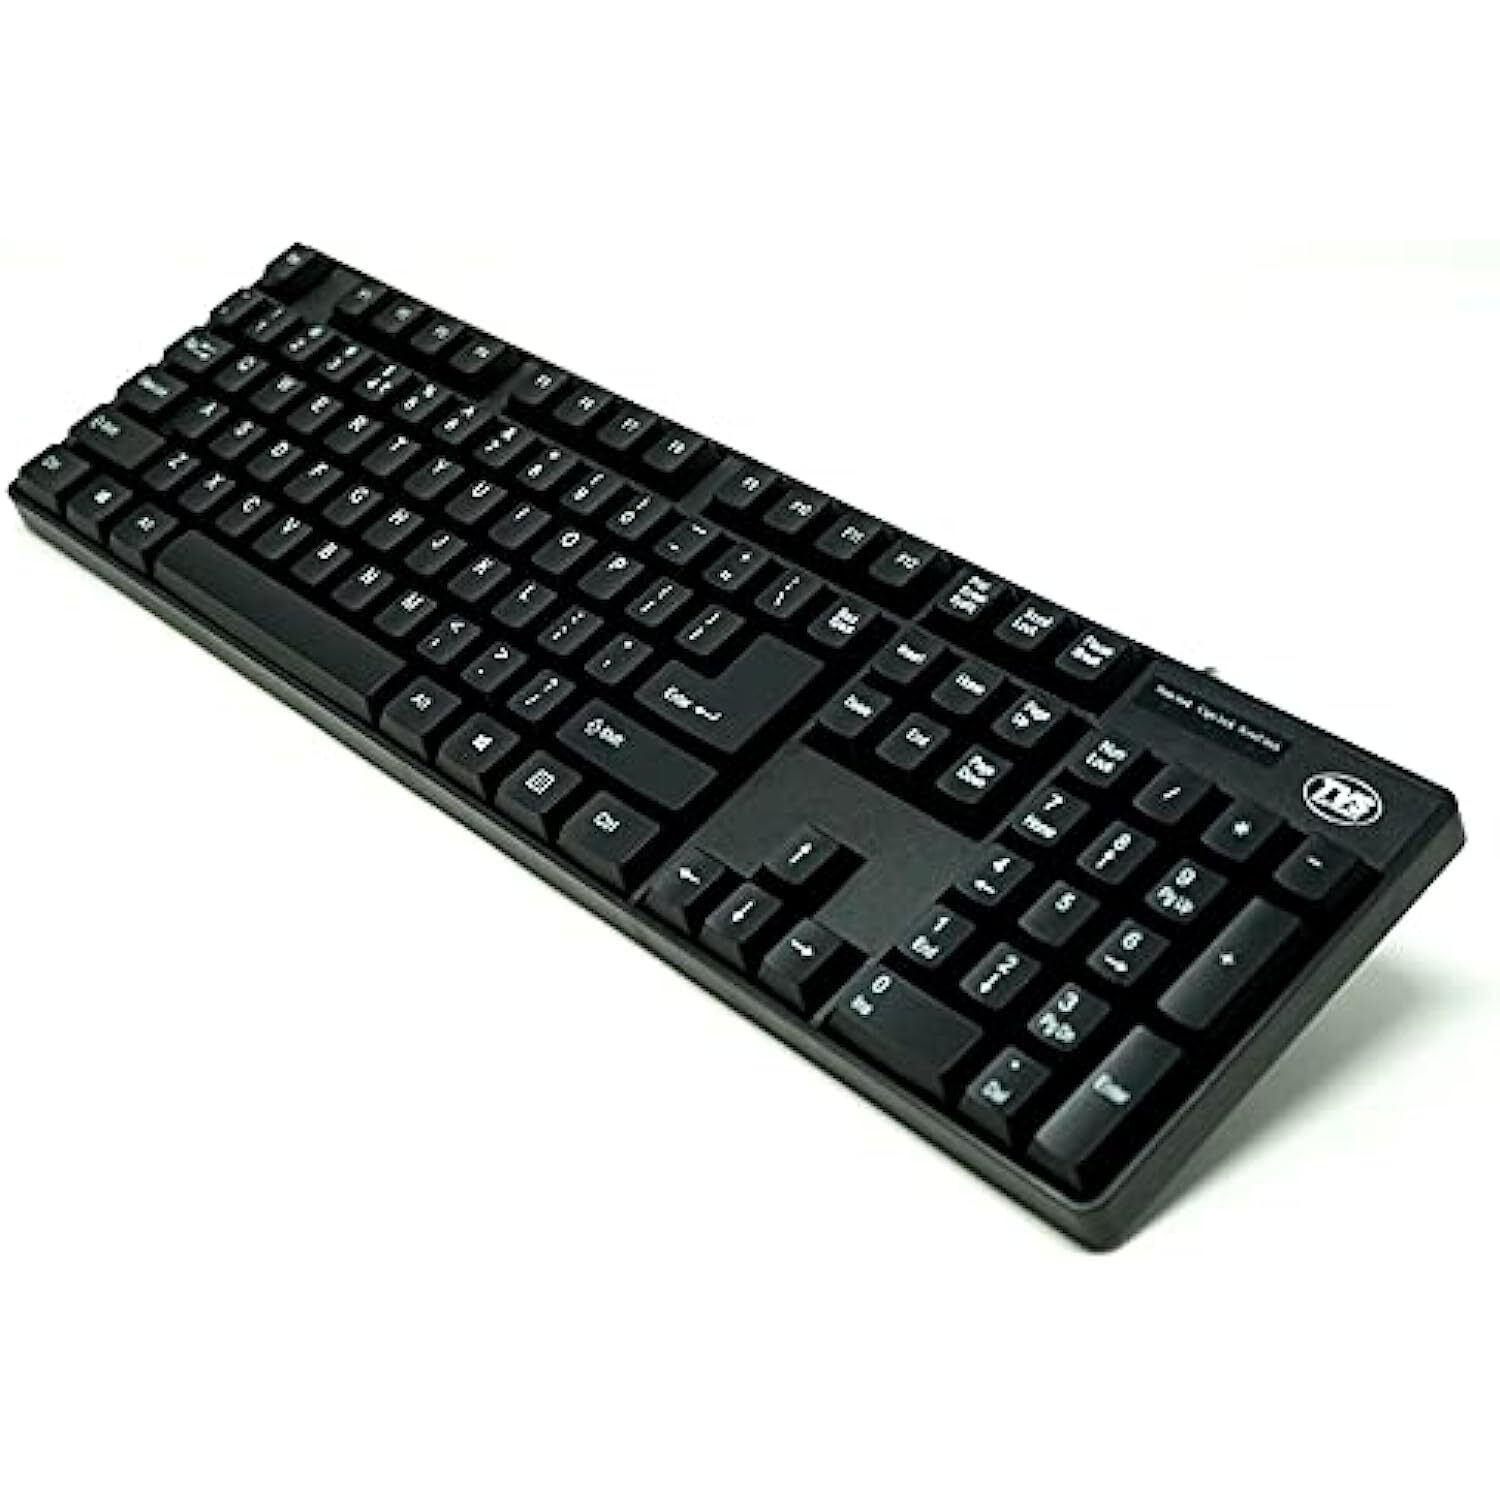 TVS Electronics Champ Wired Keyboard (Black)